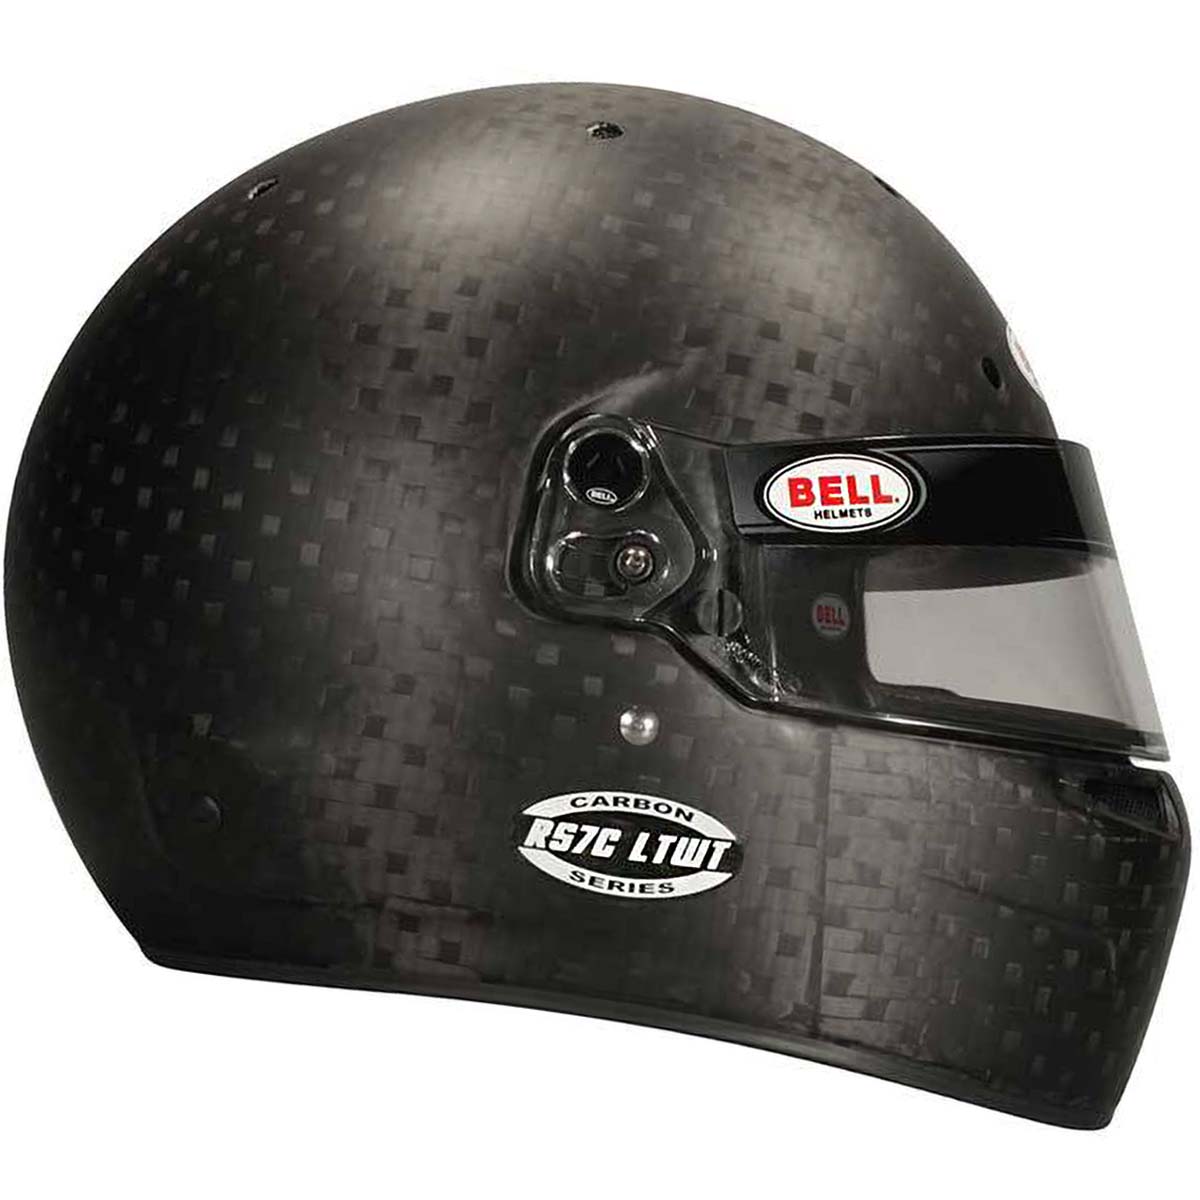 High-Resolution Bell RS7C LTWT Helmet SA2020 Side Image